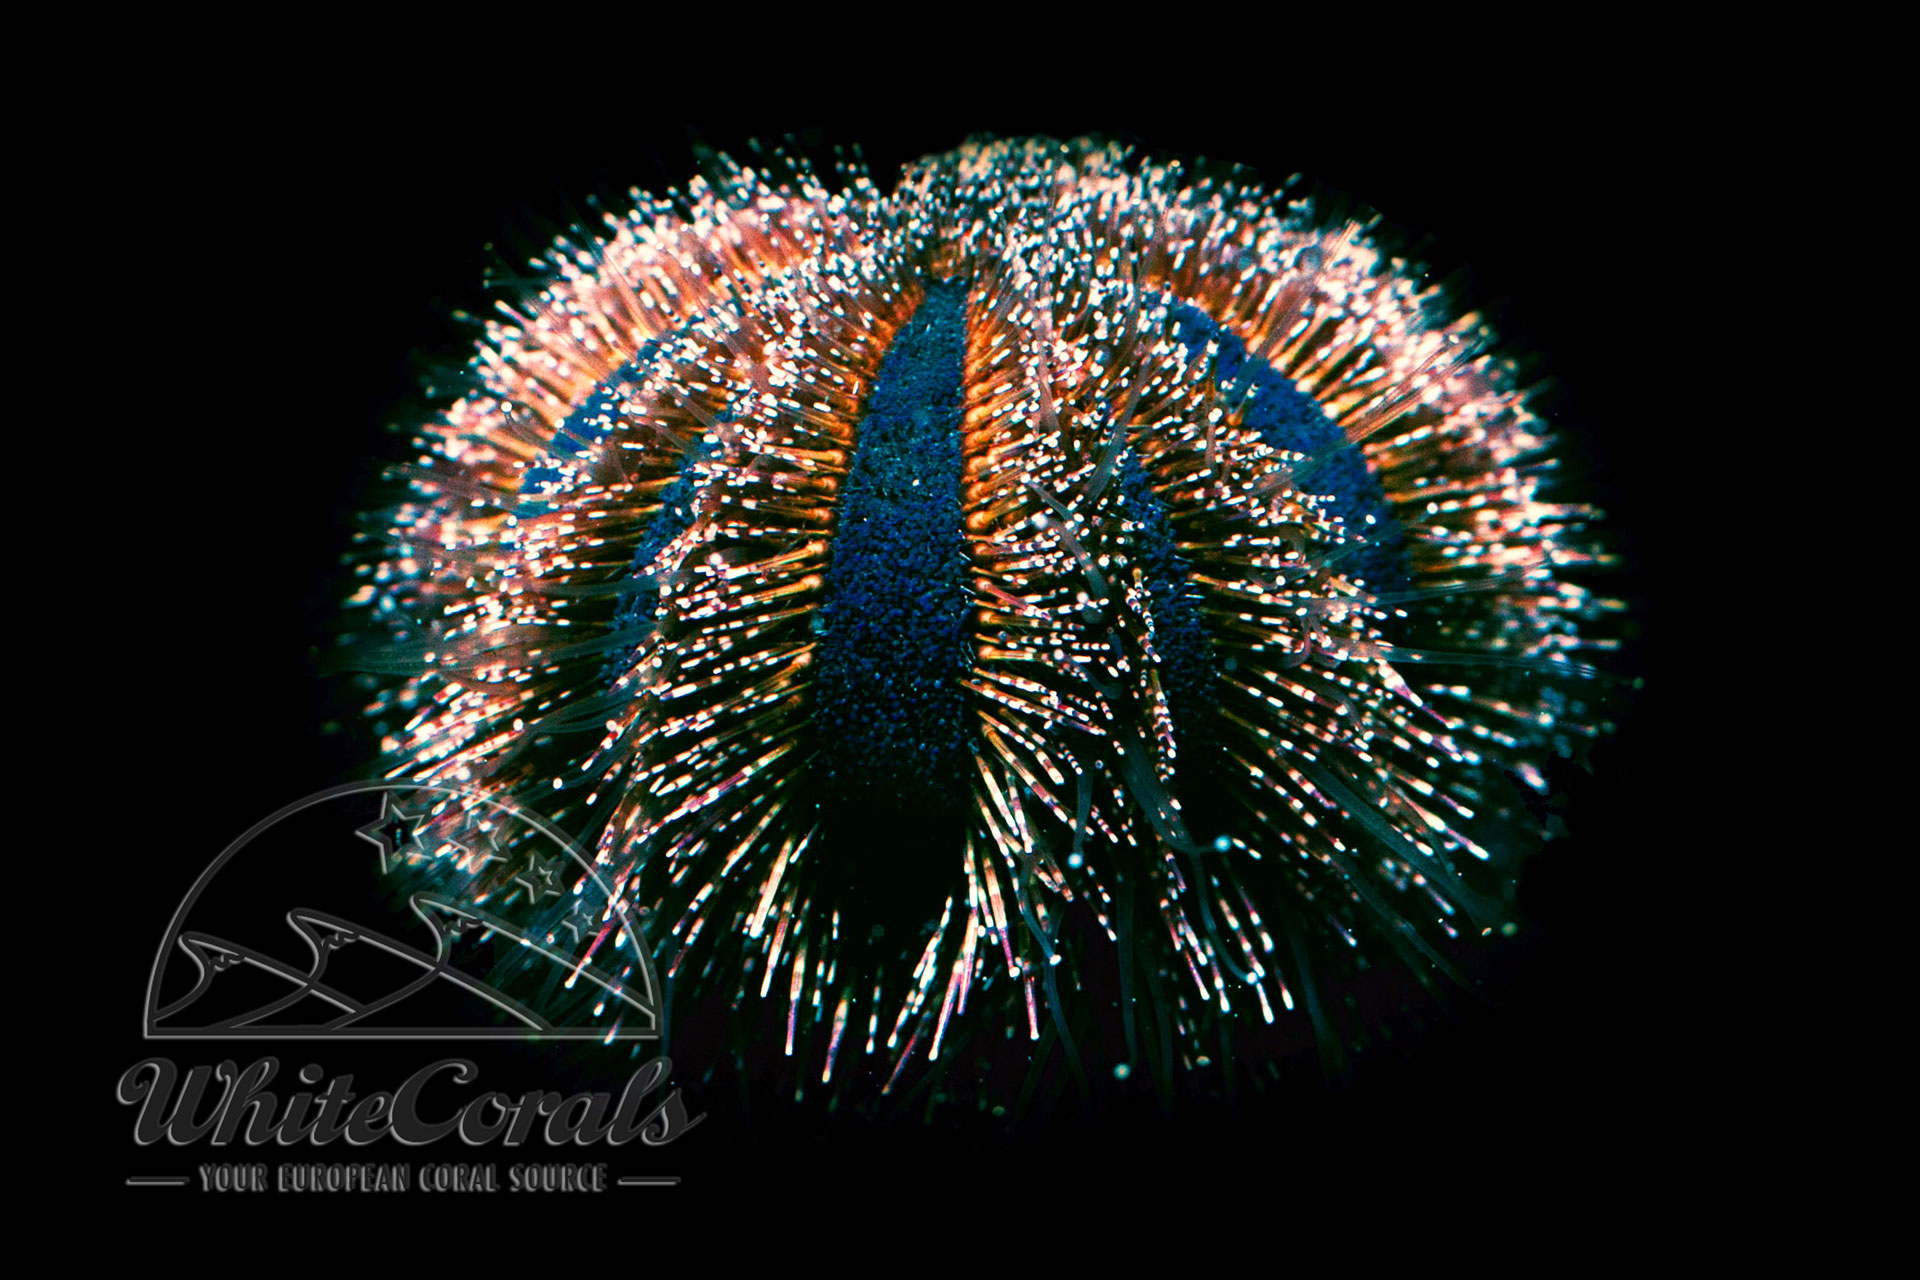 Mespilia globulus - Tuxedo Urchin